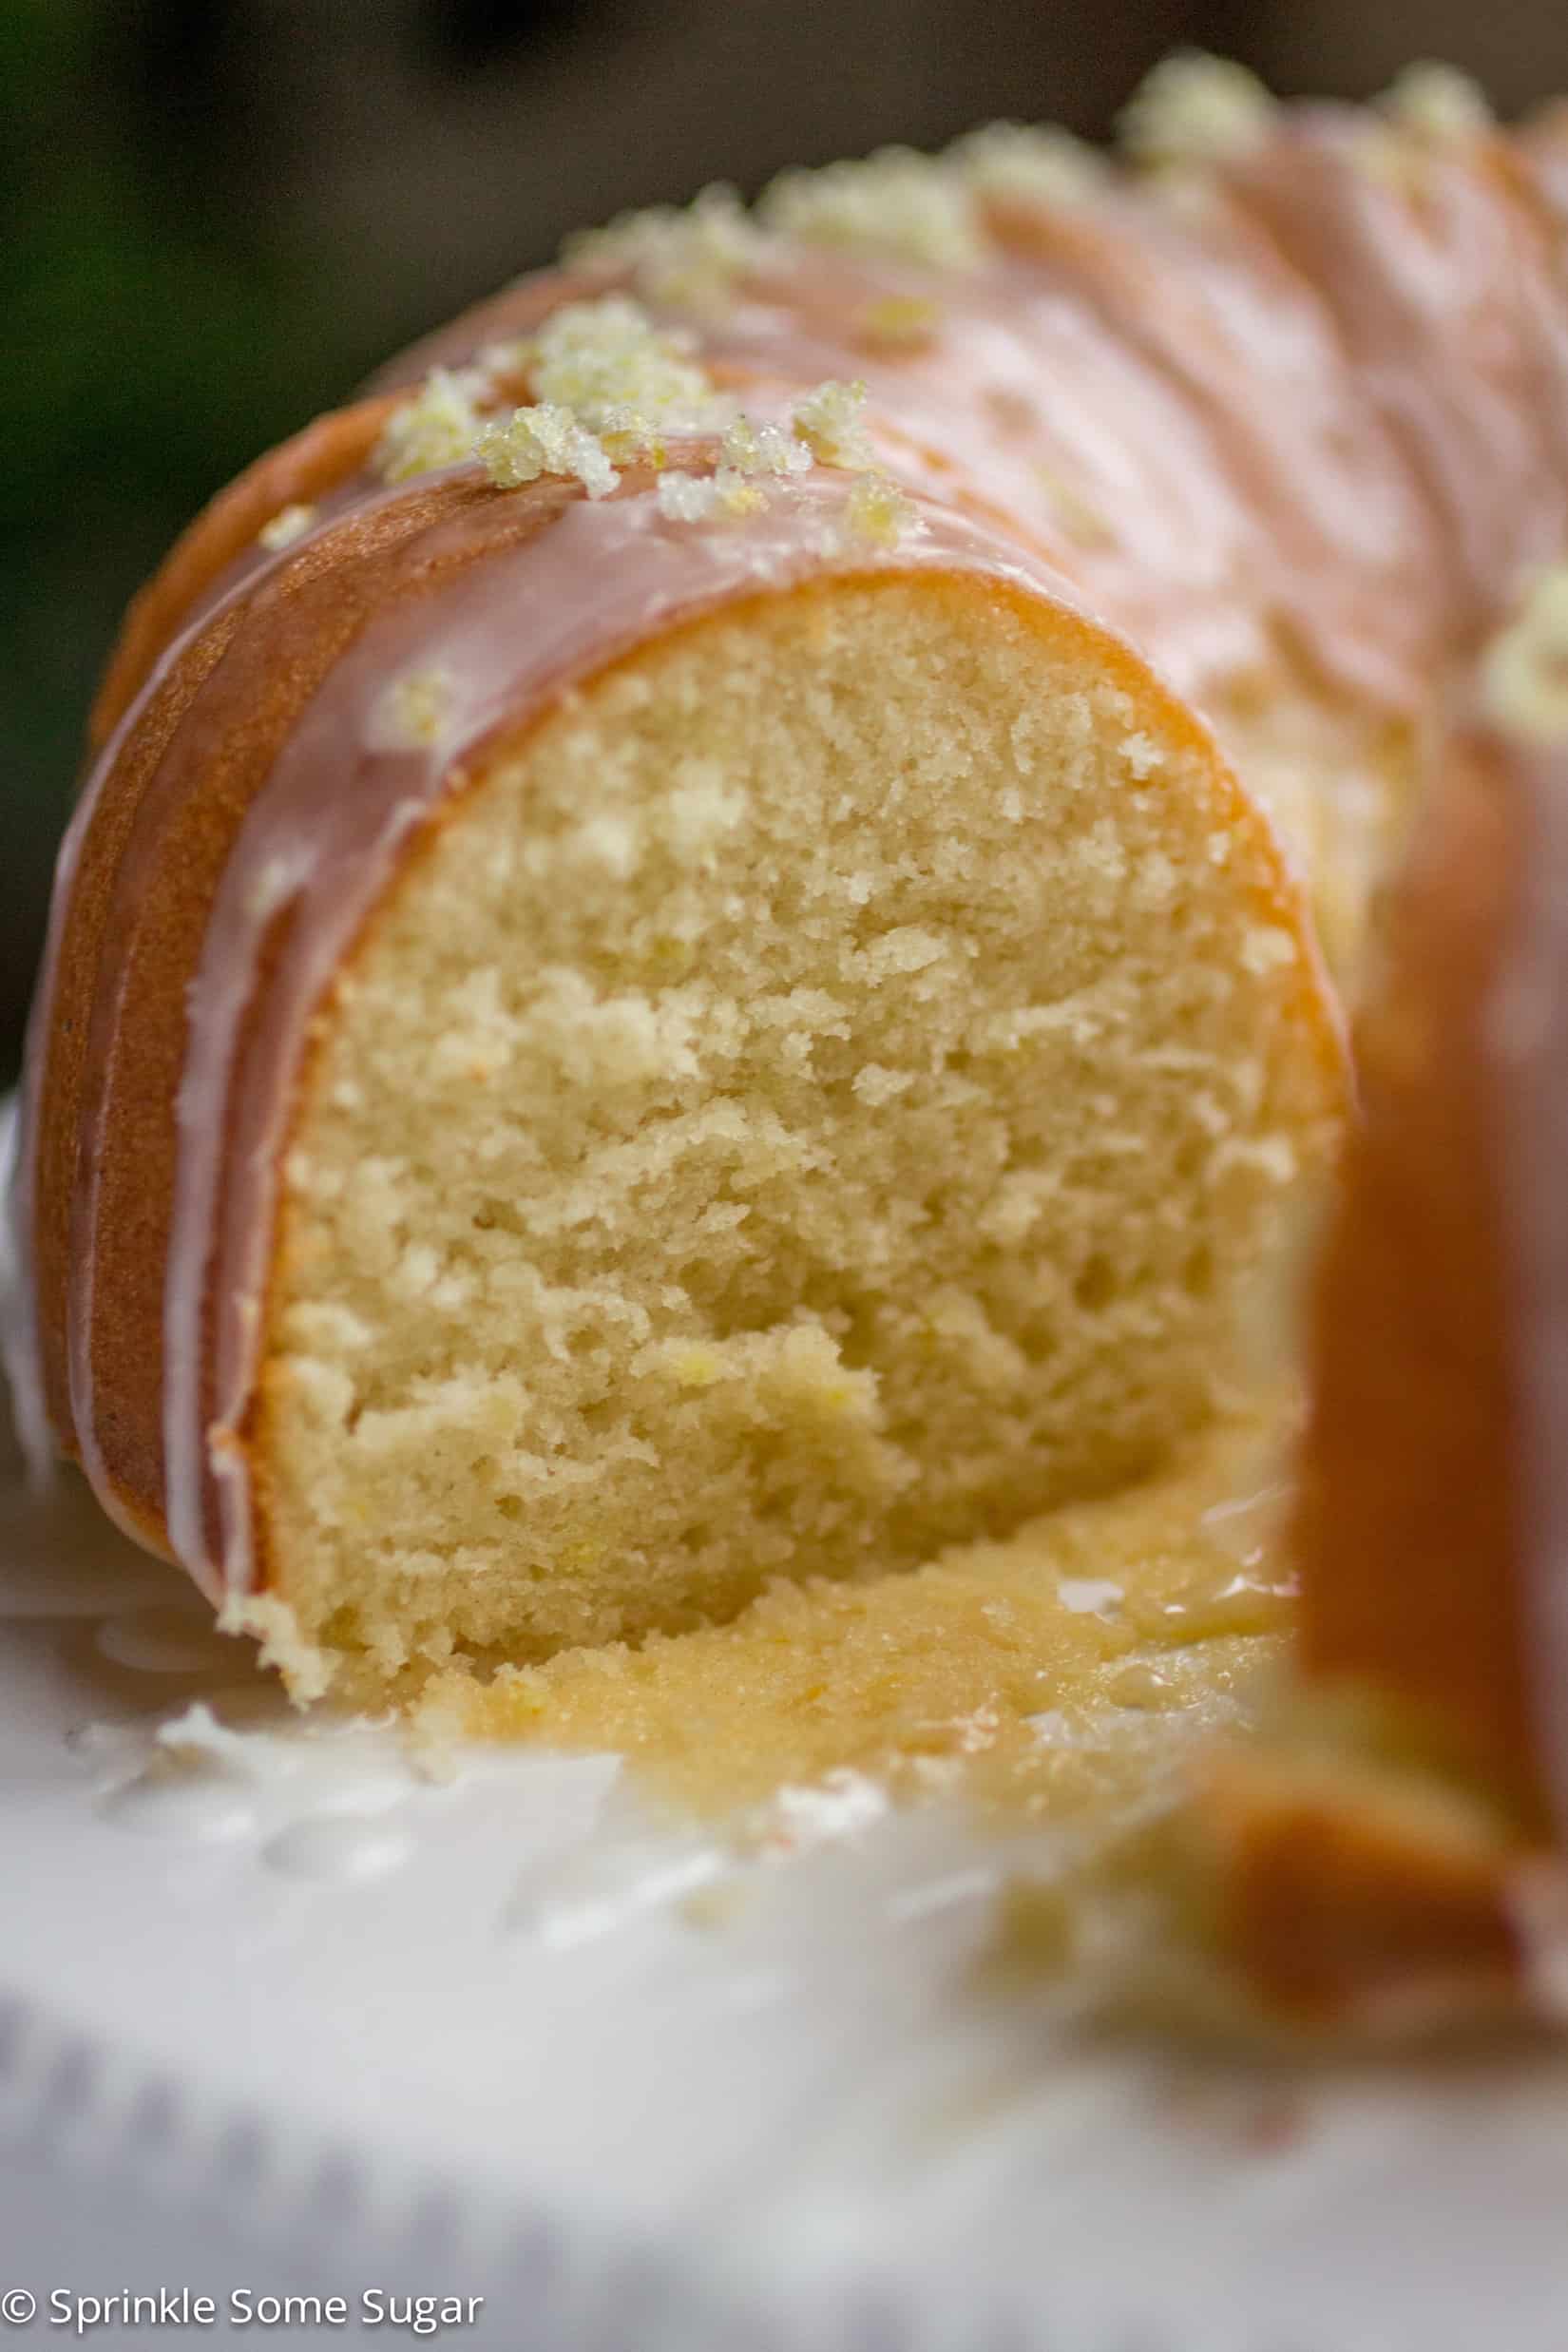 Lemon bundt cake with a slice missing revealing the soft inside.